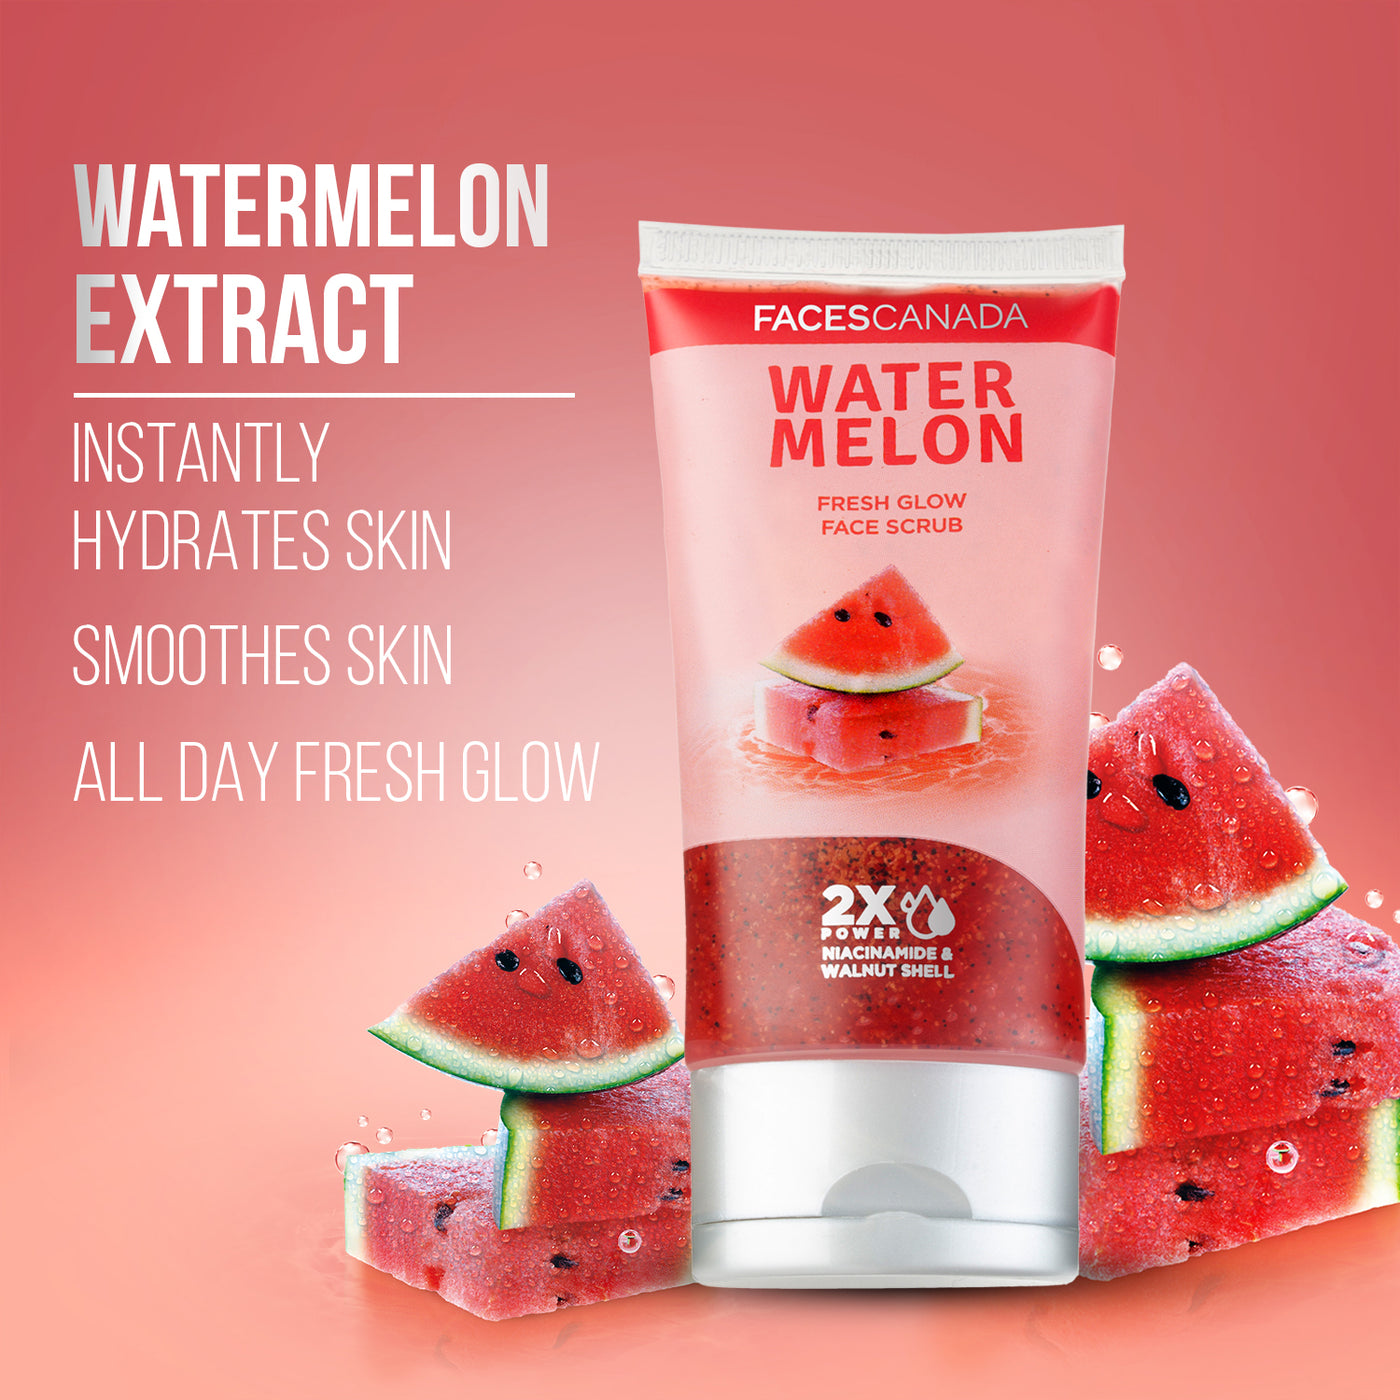 Water Melon Fresh Glow Face Scrub